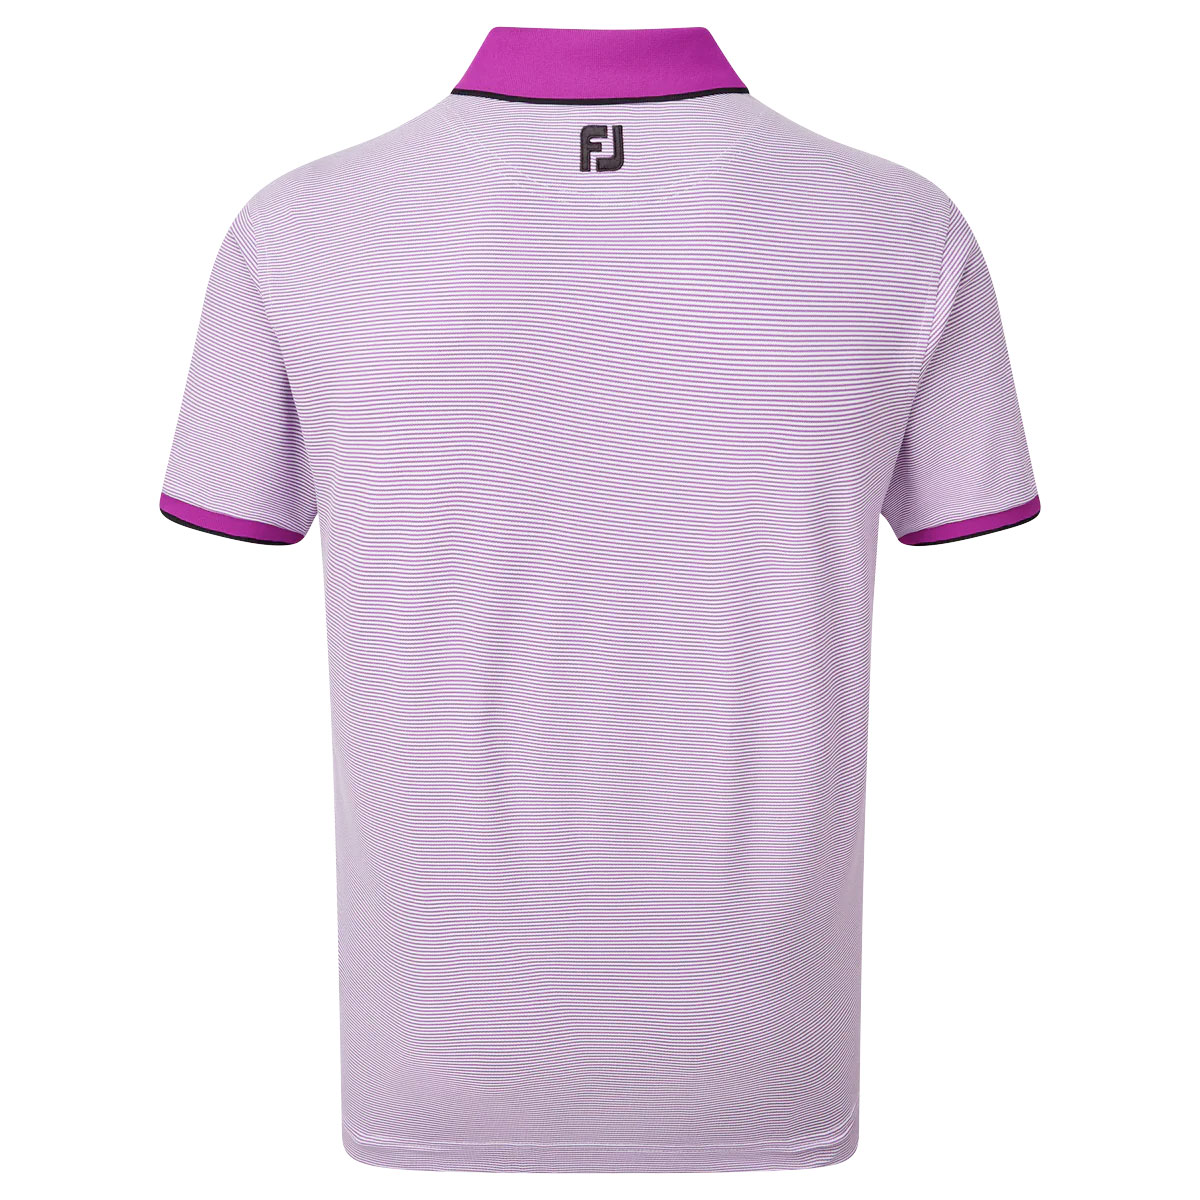 FootJoy Pique Ministripe Mens Golf Polo Shirt  - Mulberry/White